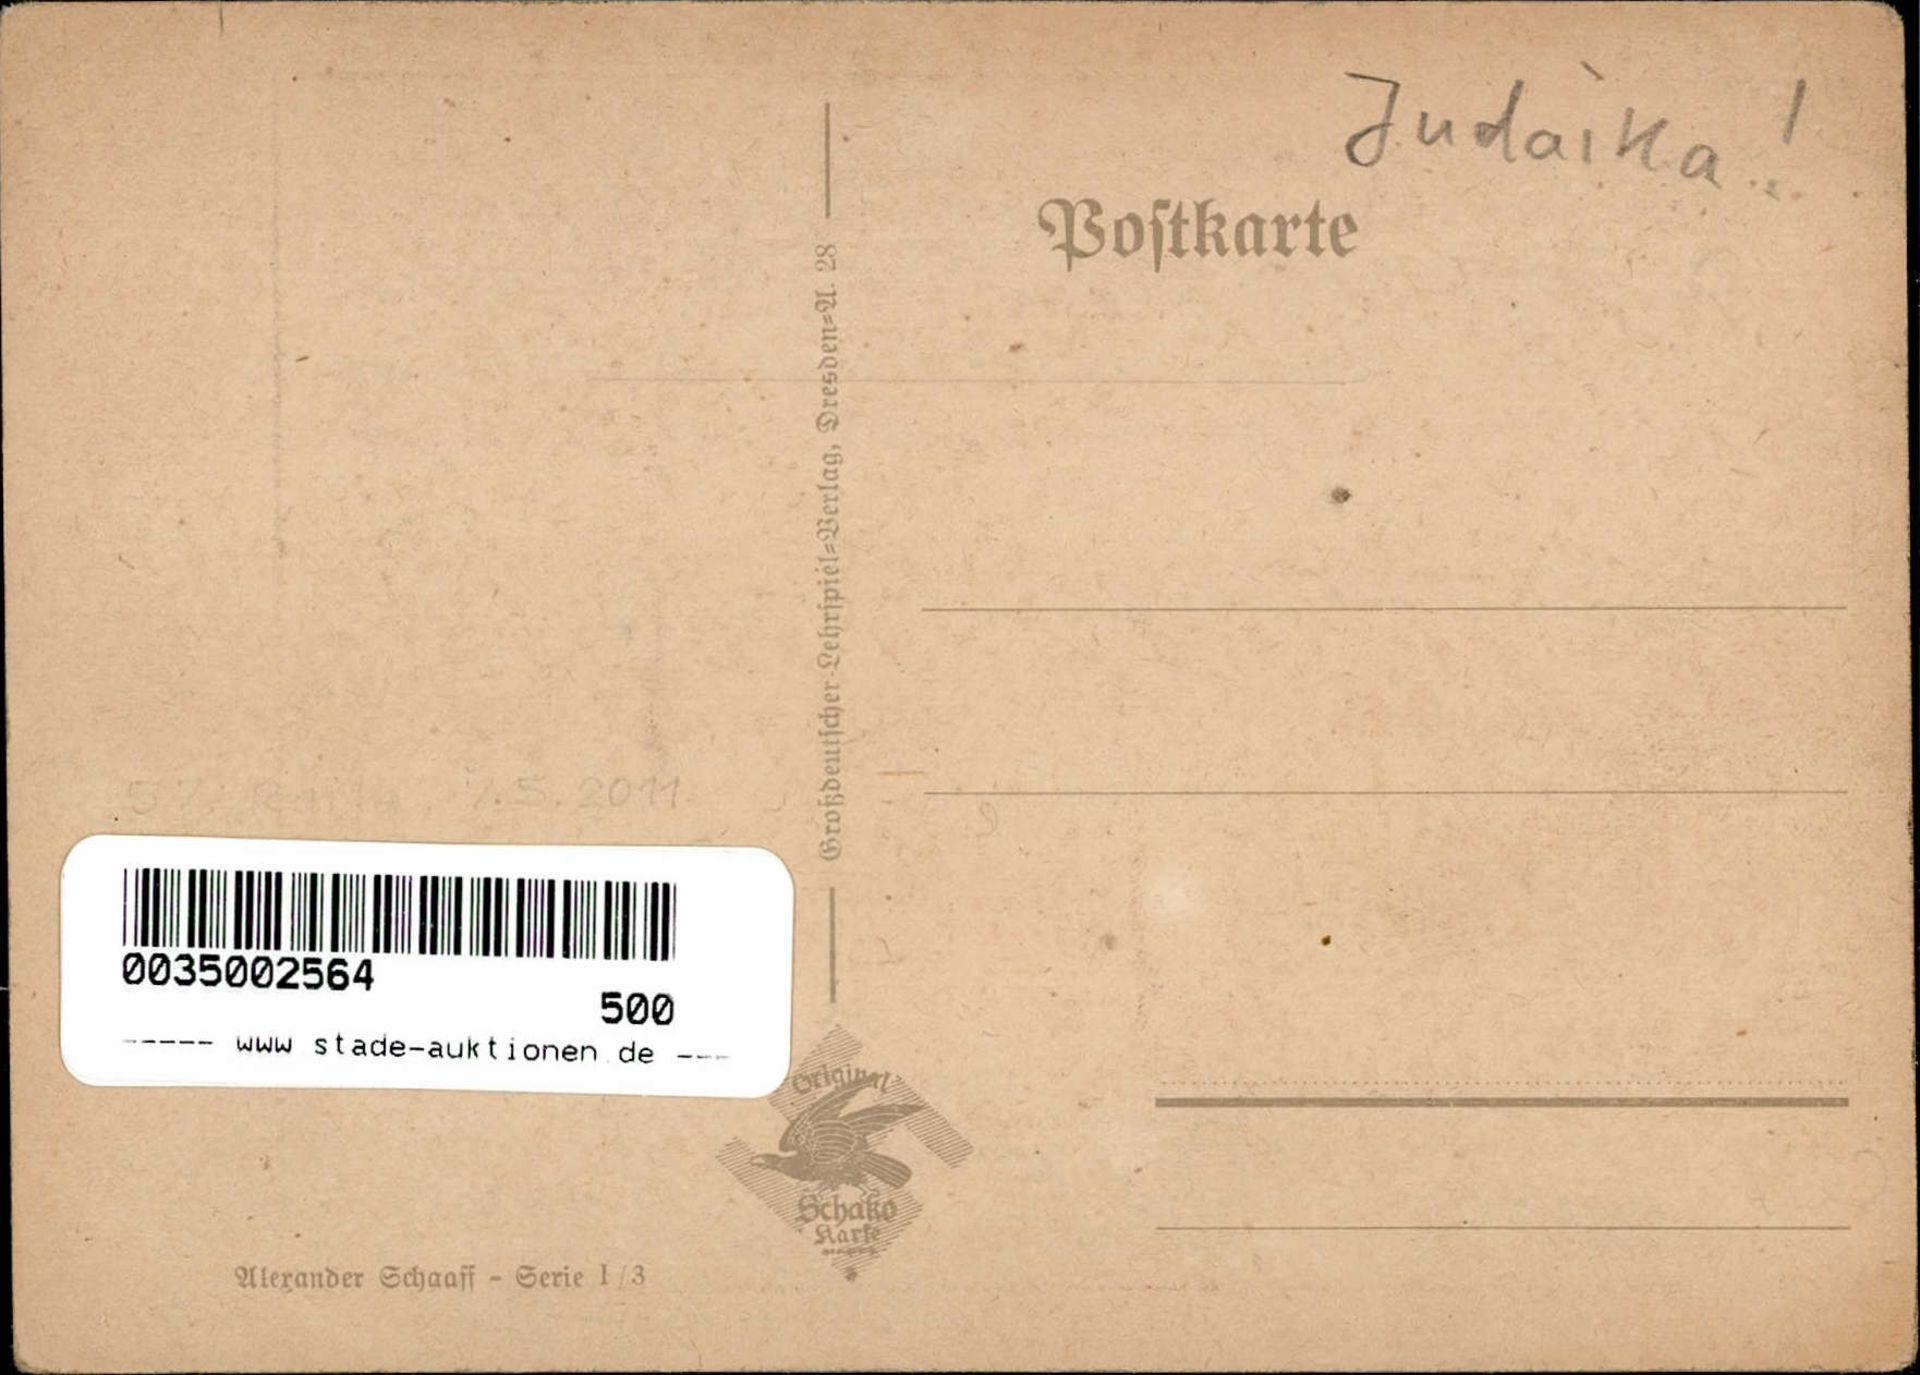 SA WK II - seltene ALEXANDER SCHAAF-Karte JUDAIKA - SEINE LEIBGARDE - greift SA an! Serie I/3 - Image 2 of 2